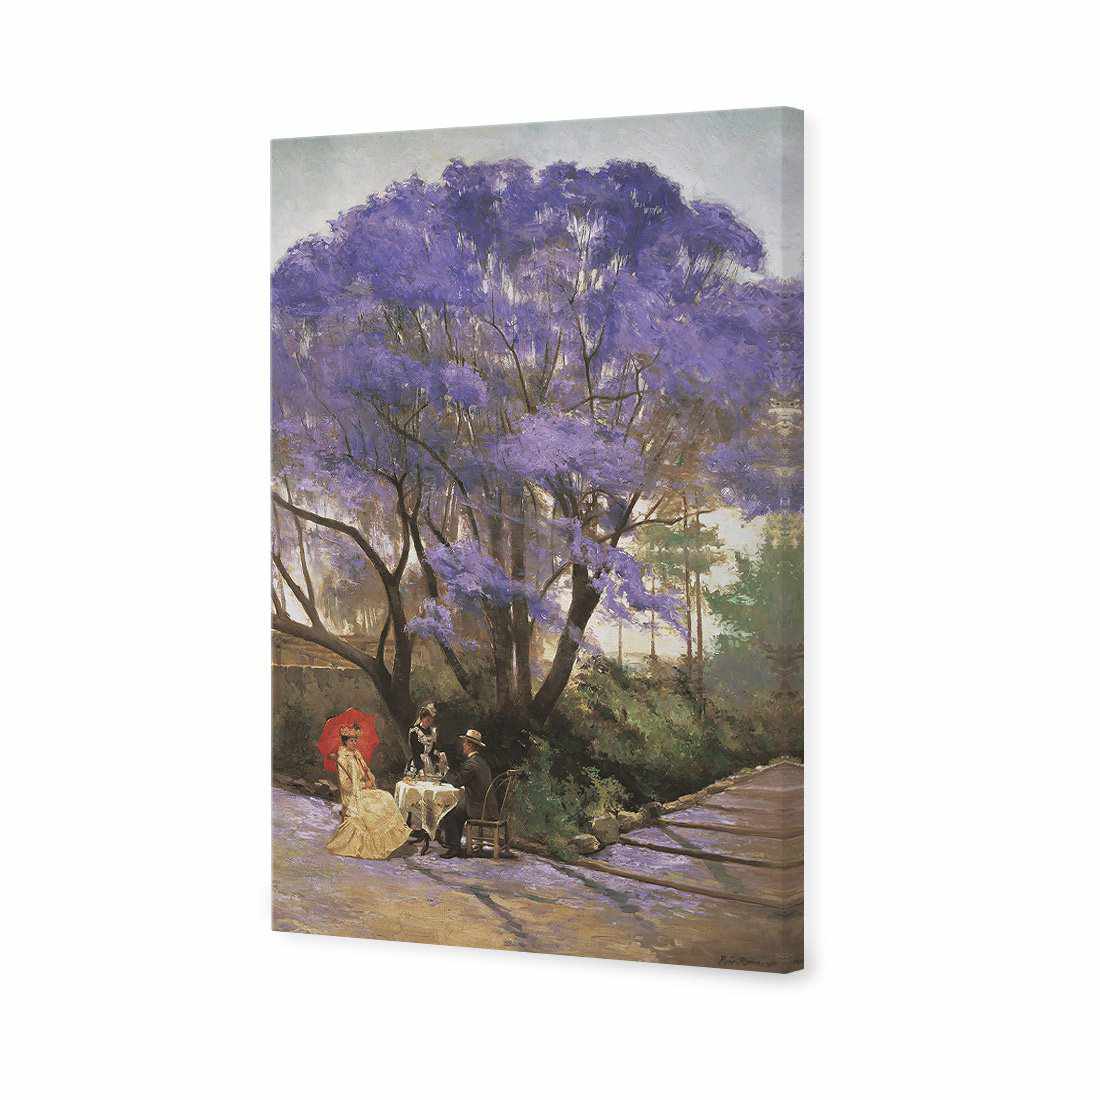 Under The Jacaranda by Godfrey Rivers Canvas Art-Canvas-Wall Art Designs-45x30cm-Canvas - No Frame-Wall Art Designs